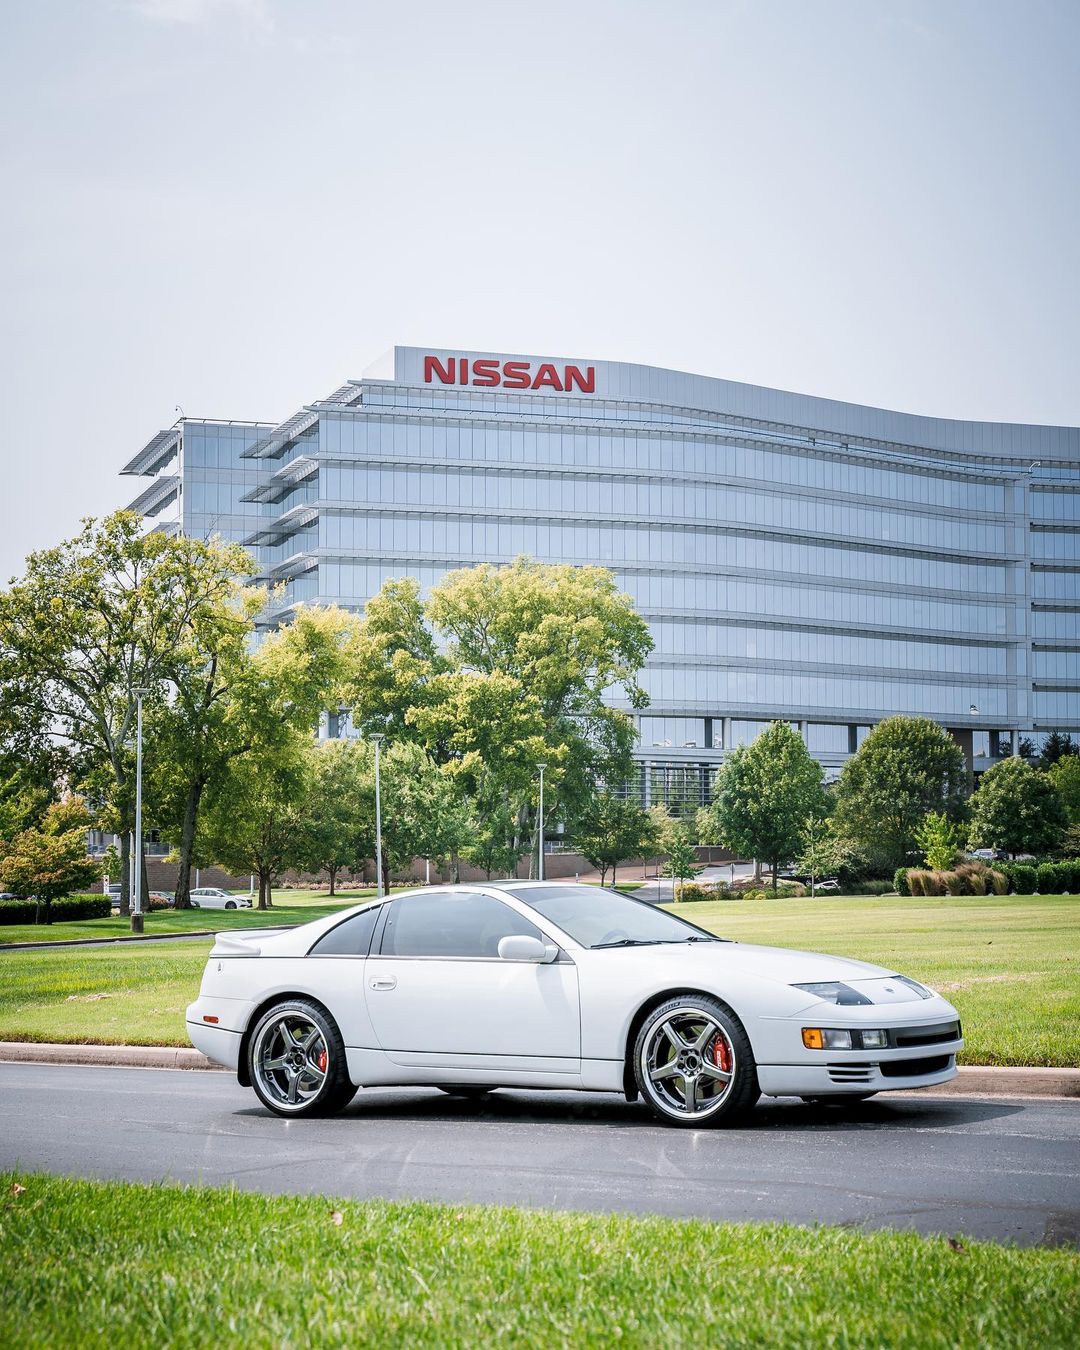 Nissan GTR Outside of the Nissan Headquarters. Photo by Instagram user @fairladyallianceofatlanta